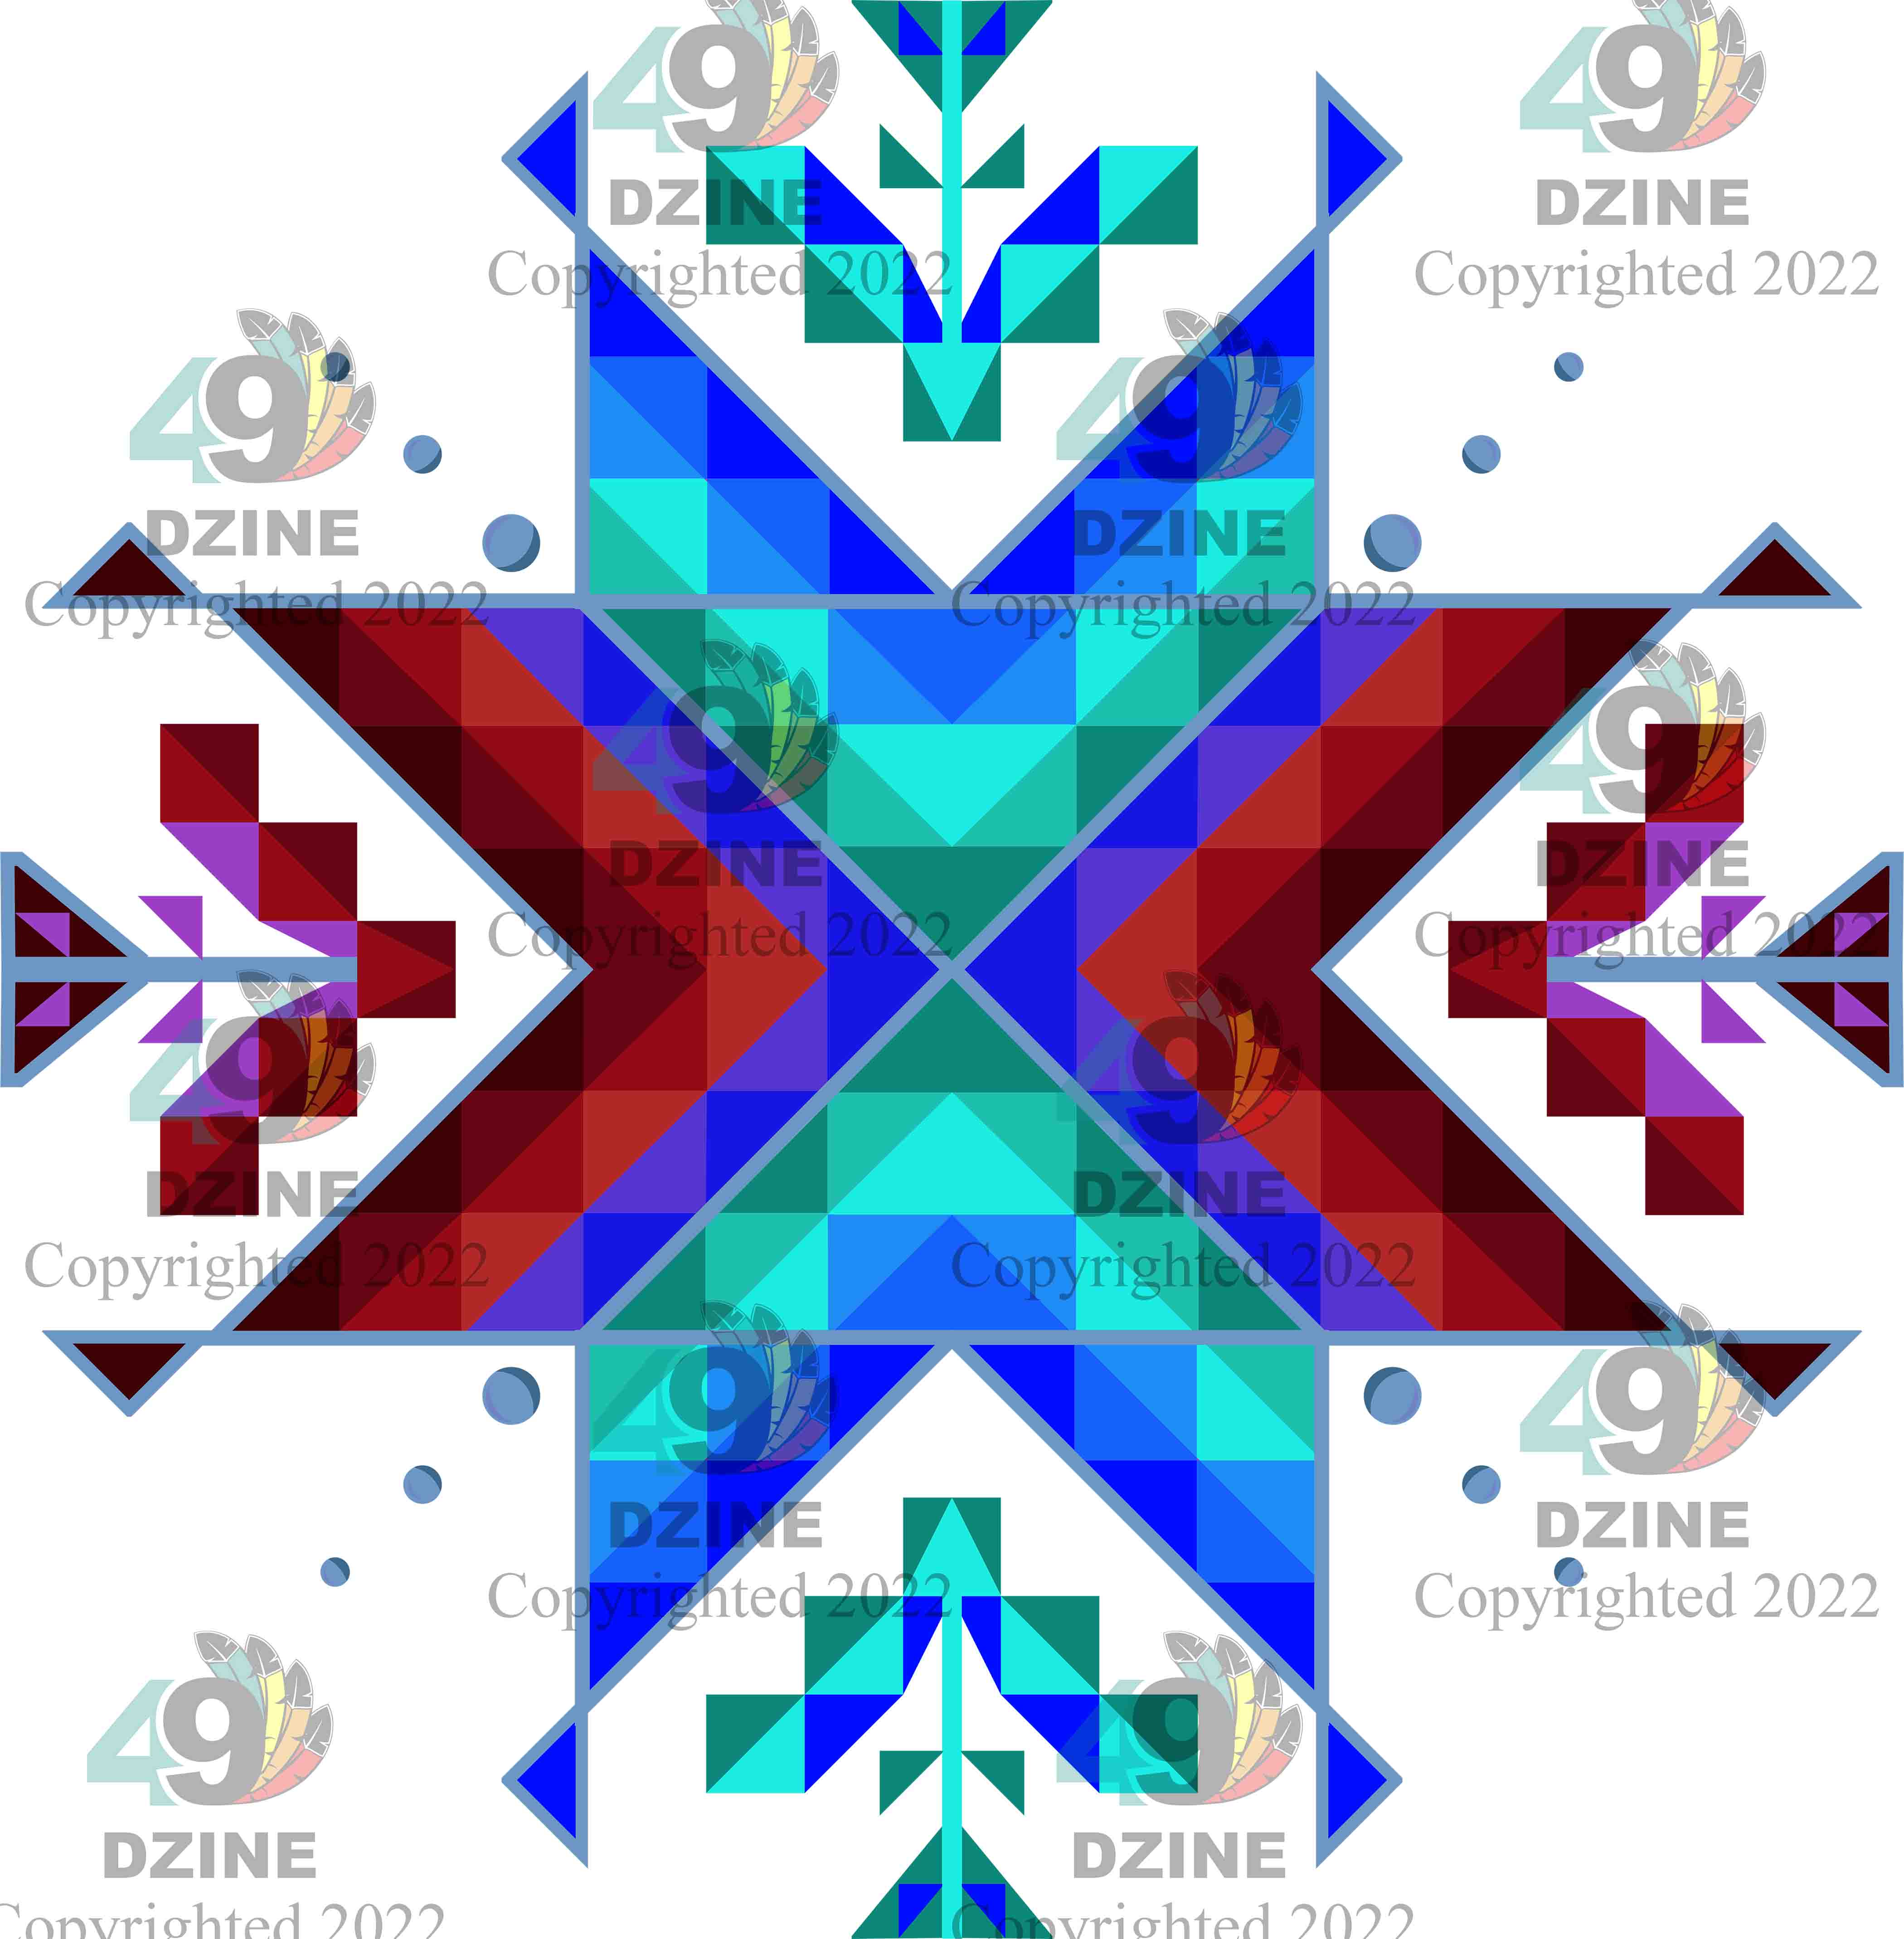 11-inch Geometric Transfer Dream of the Ancestors Transfers 49 Dzine Dream of the Ancestors Blue 